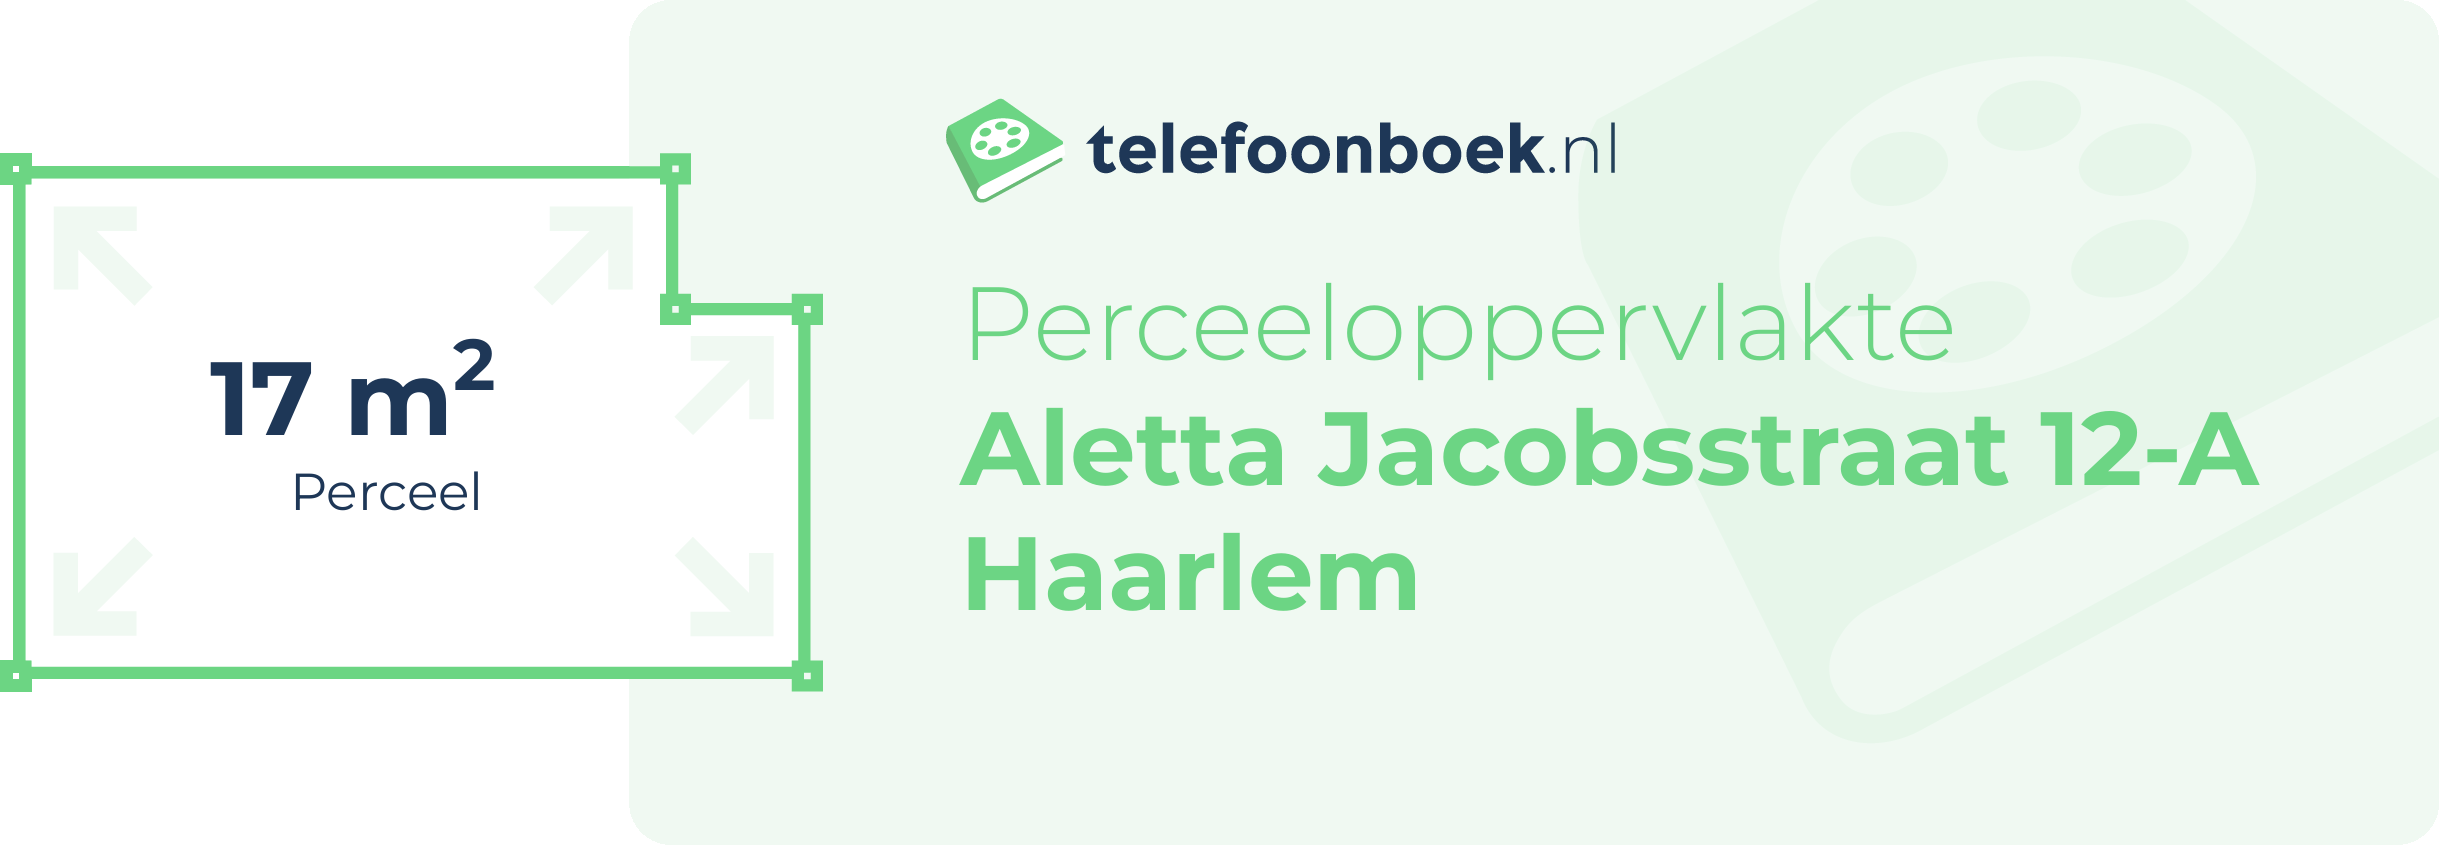 Perceeloppervlakte Aletta Jacobsstraat 12-A Haarlem